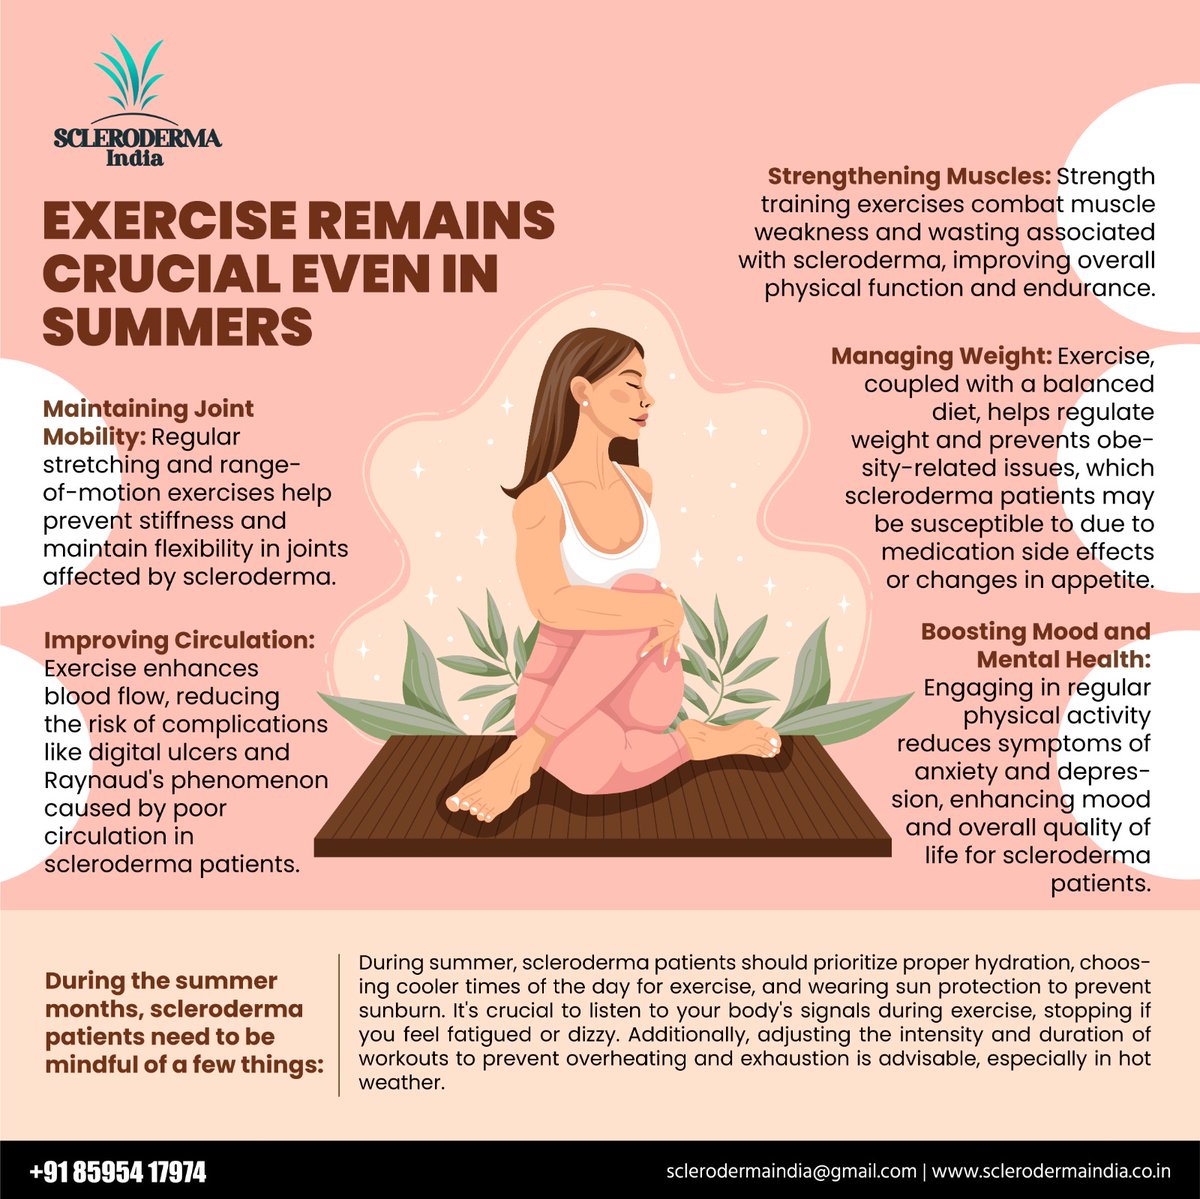 Exercise remains crucial even in summers! #SclerodermaIndia #Scleroderma #AutoImmuneDisease #ChronicIllness #Exercise #Summer